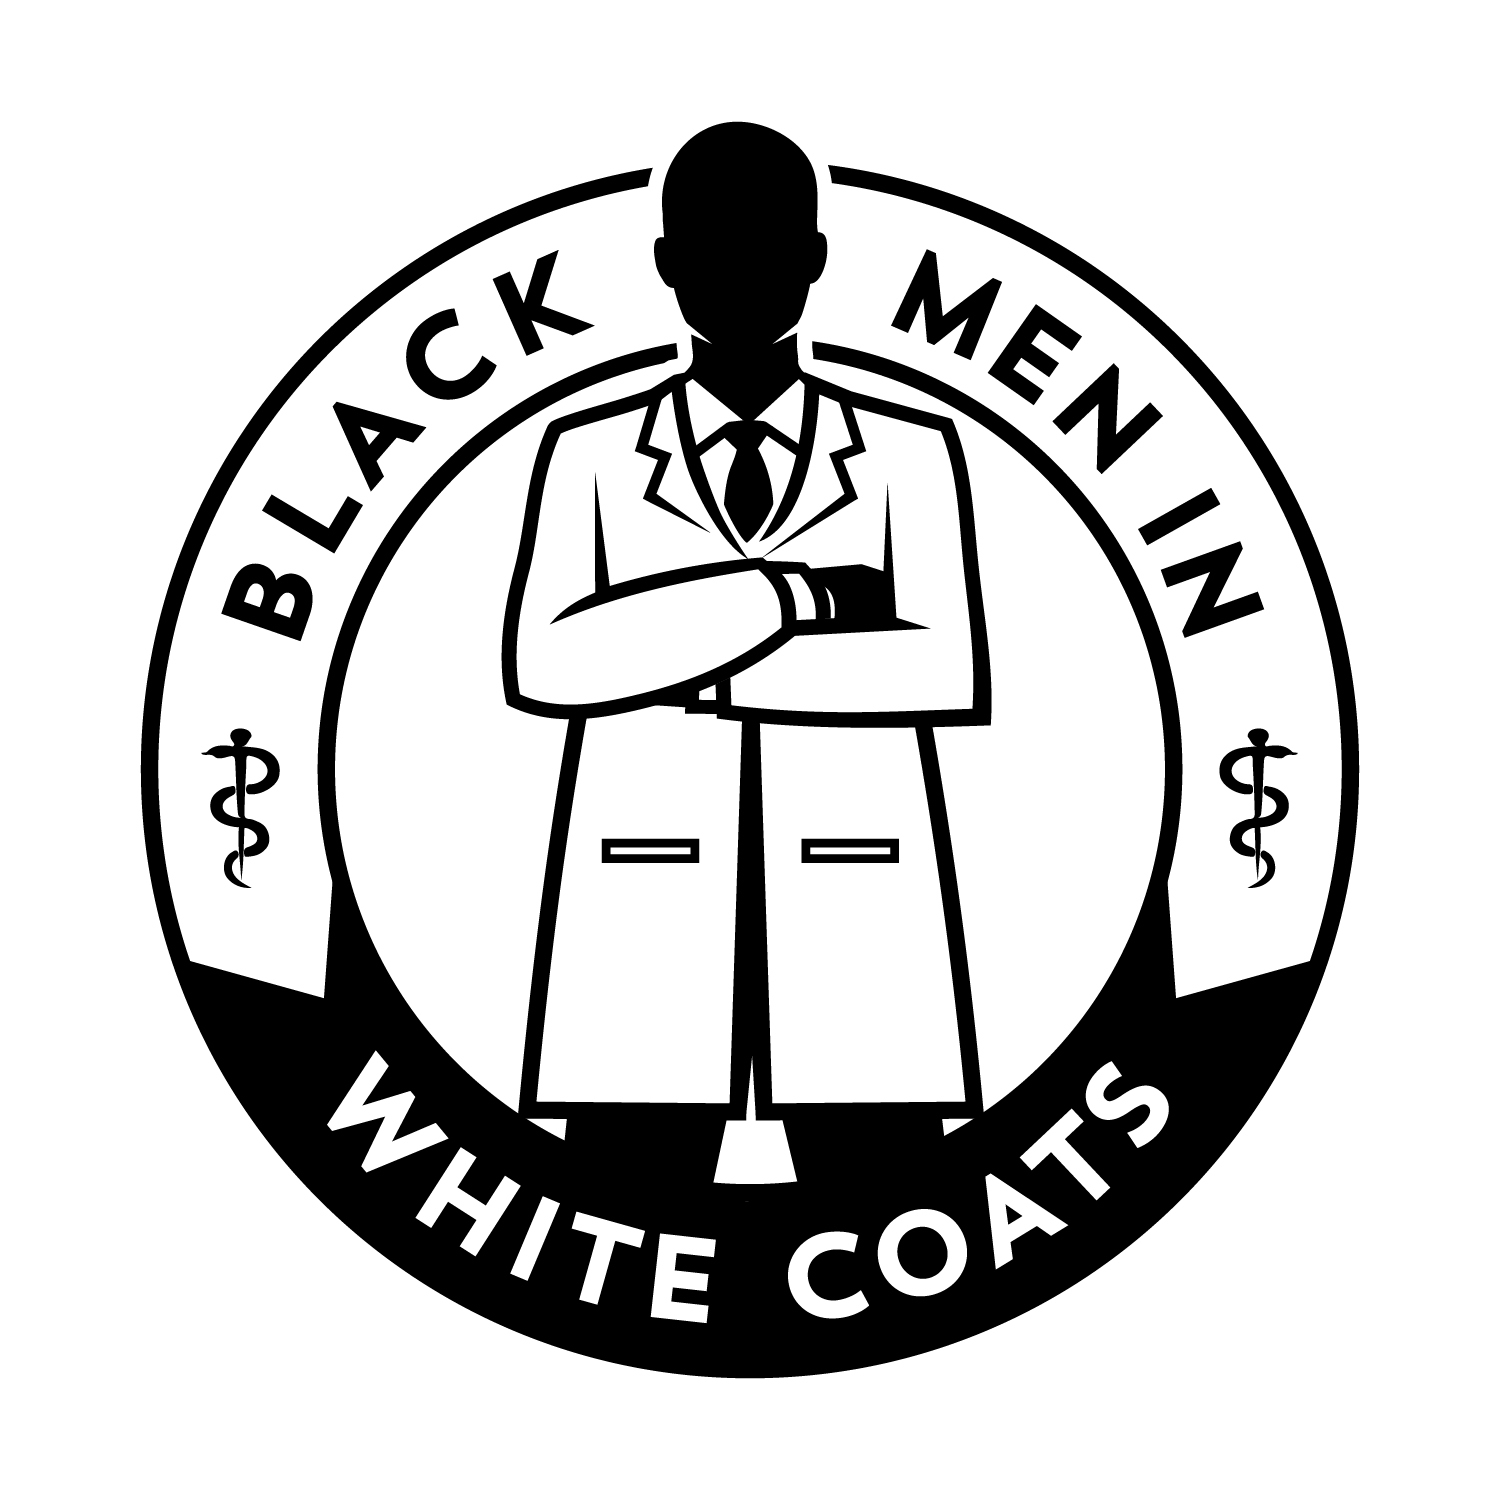 www.blackmeninwhitecoats.org